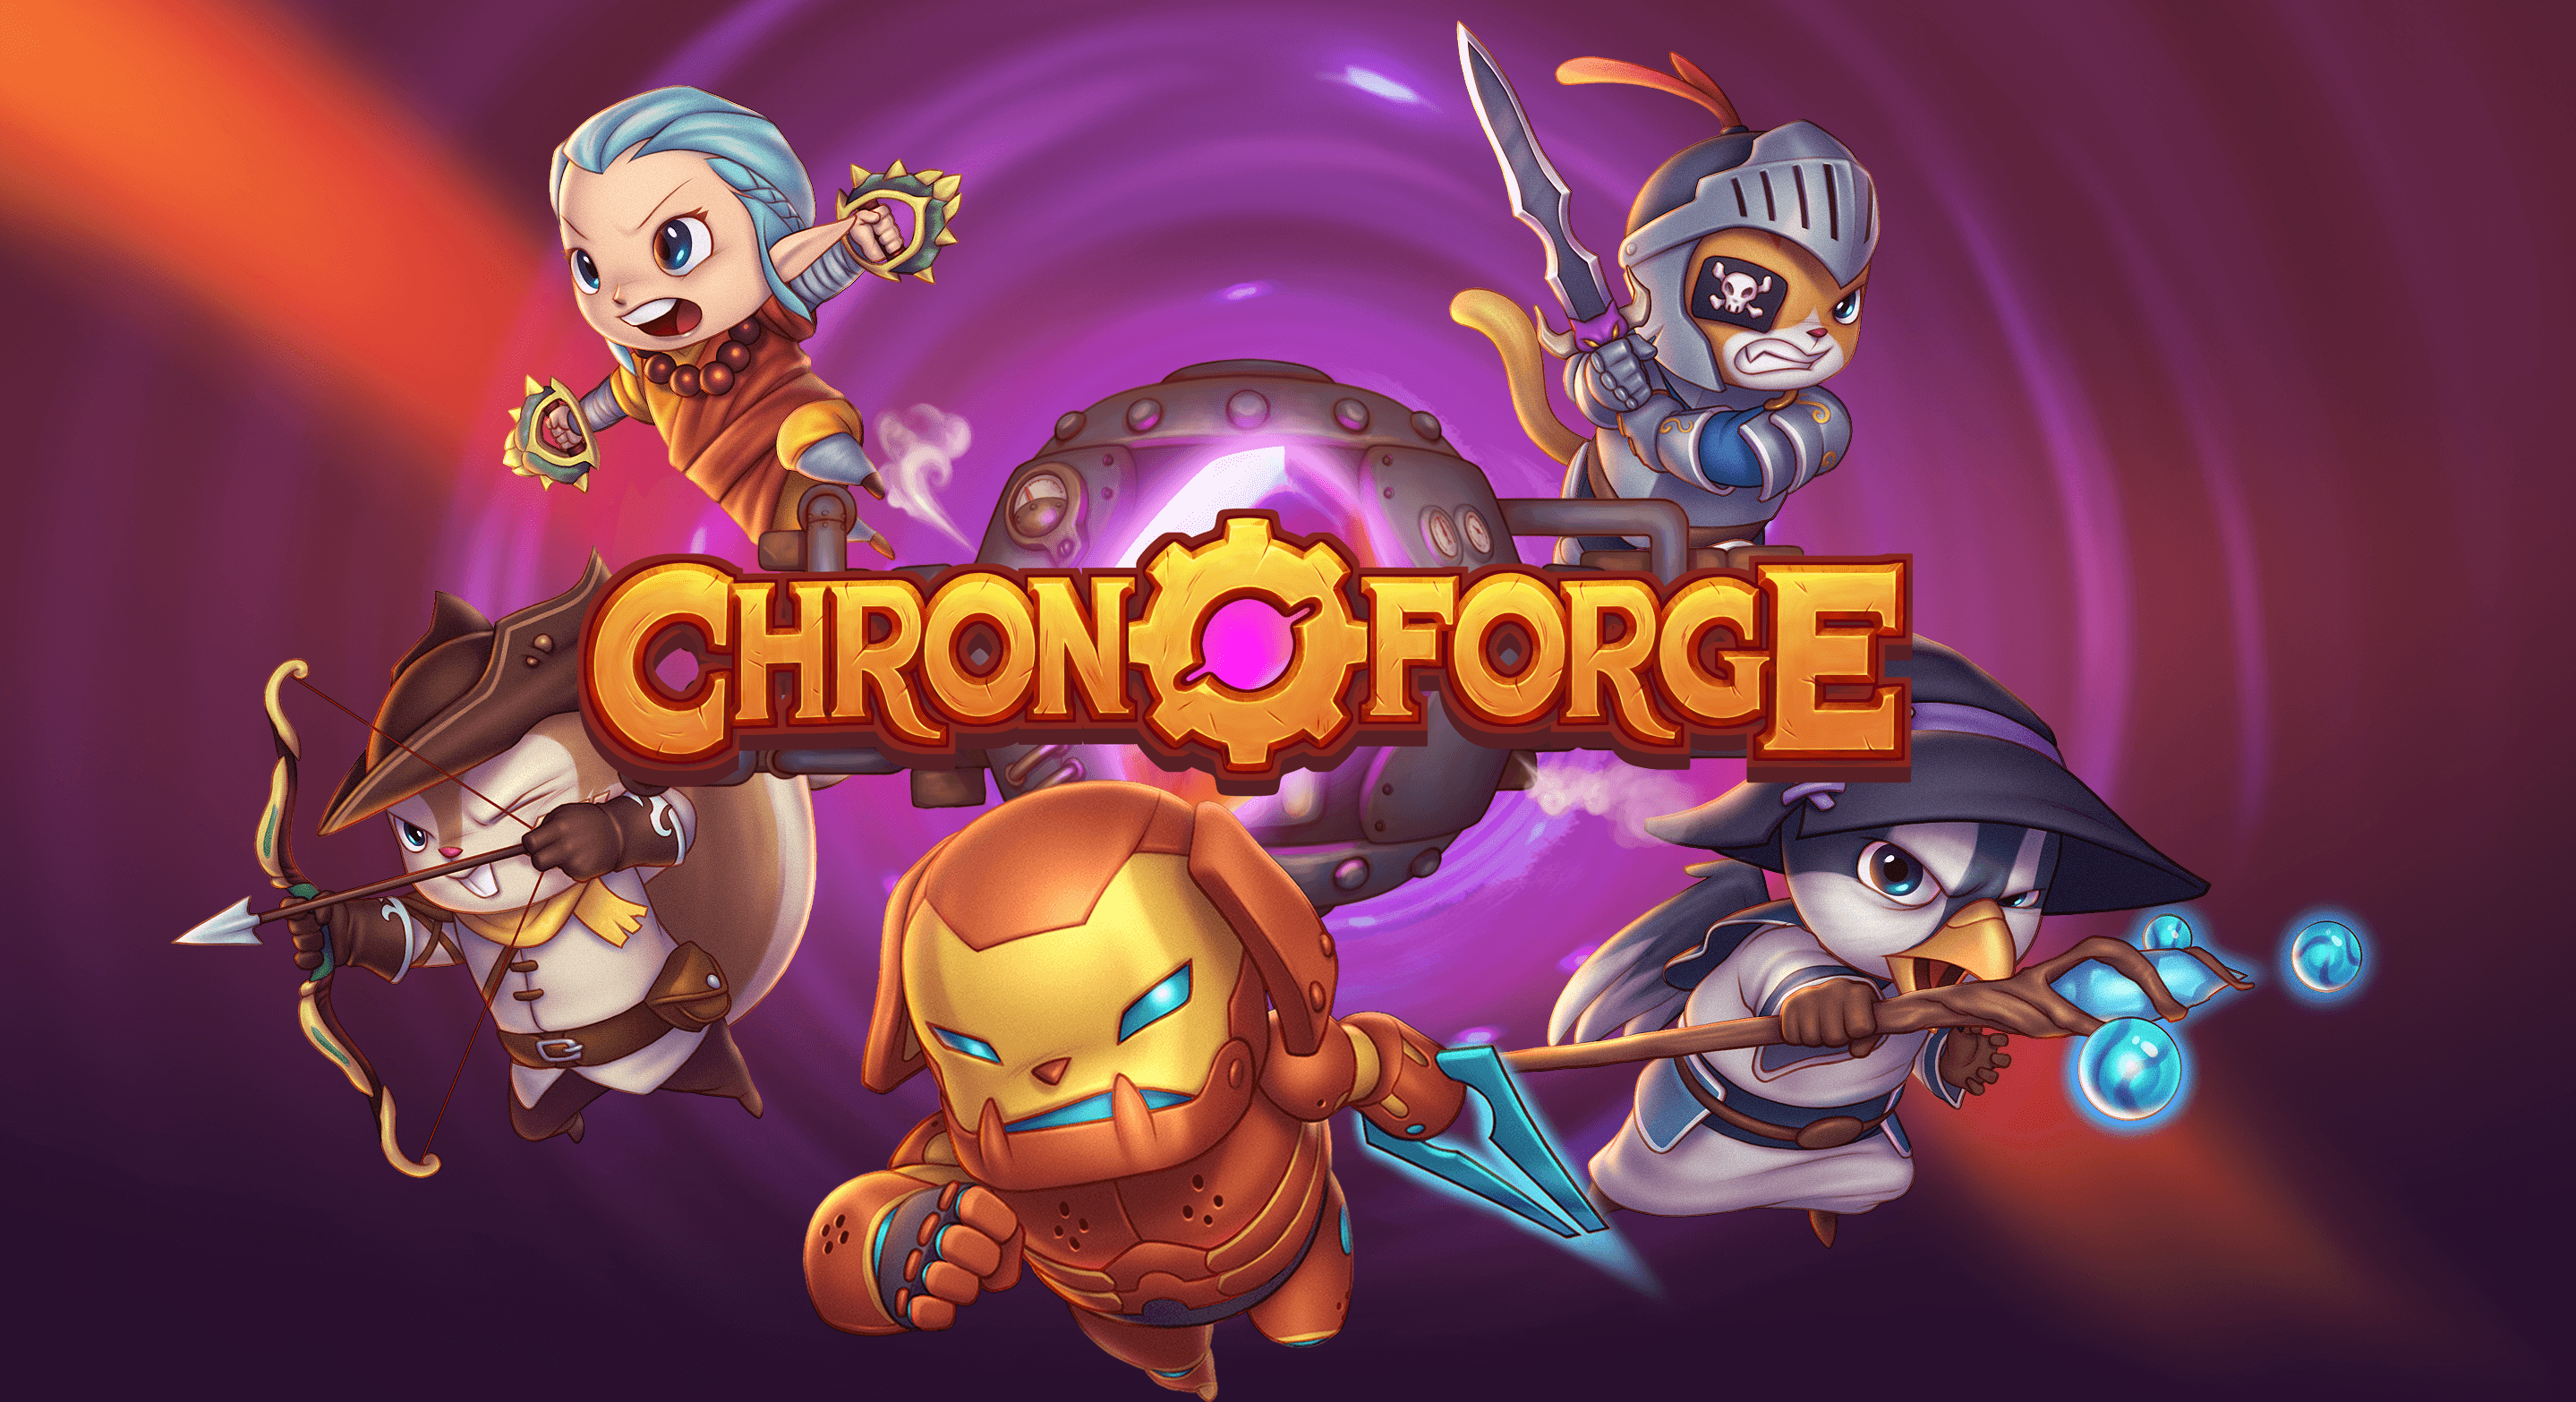 ChronoForge